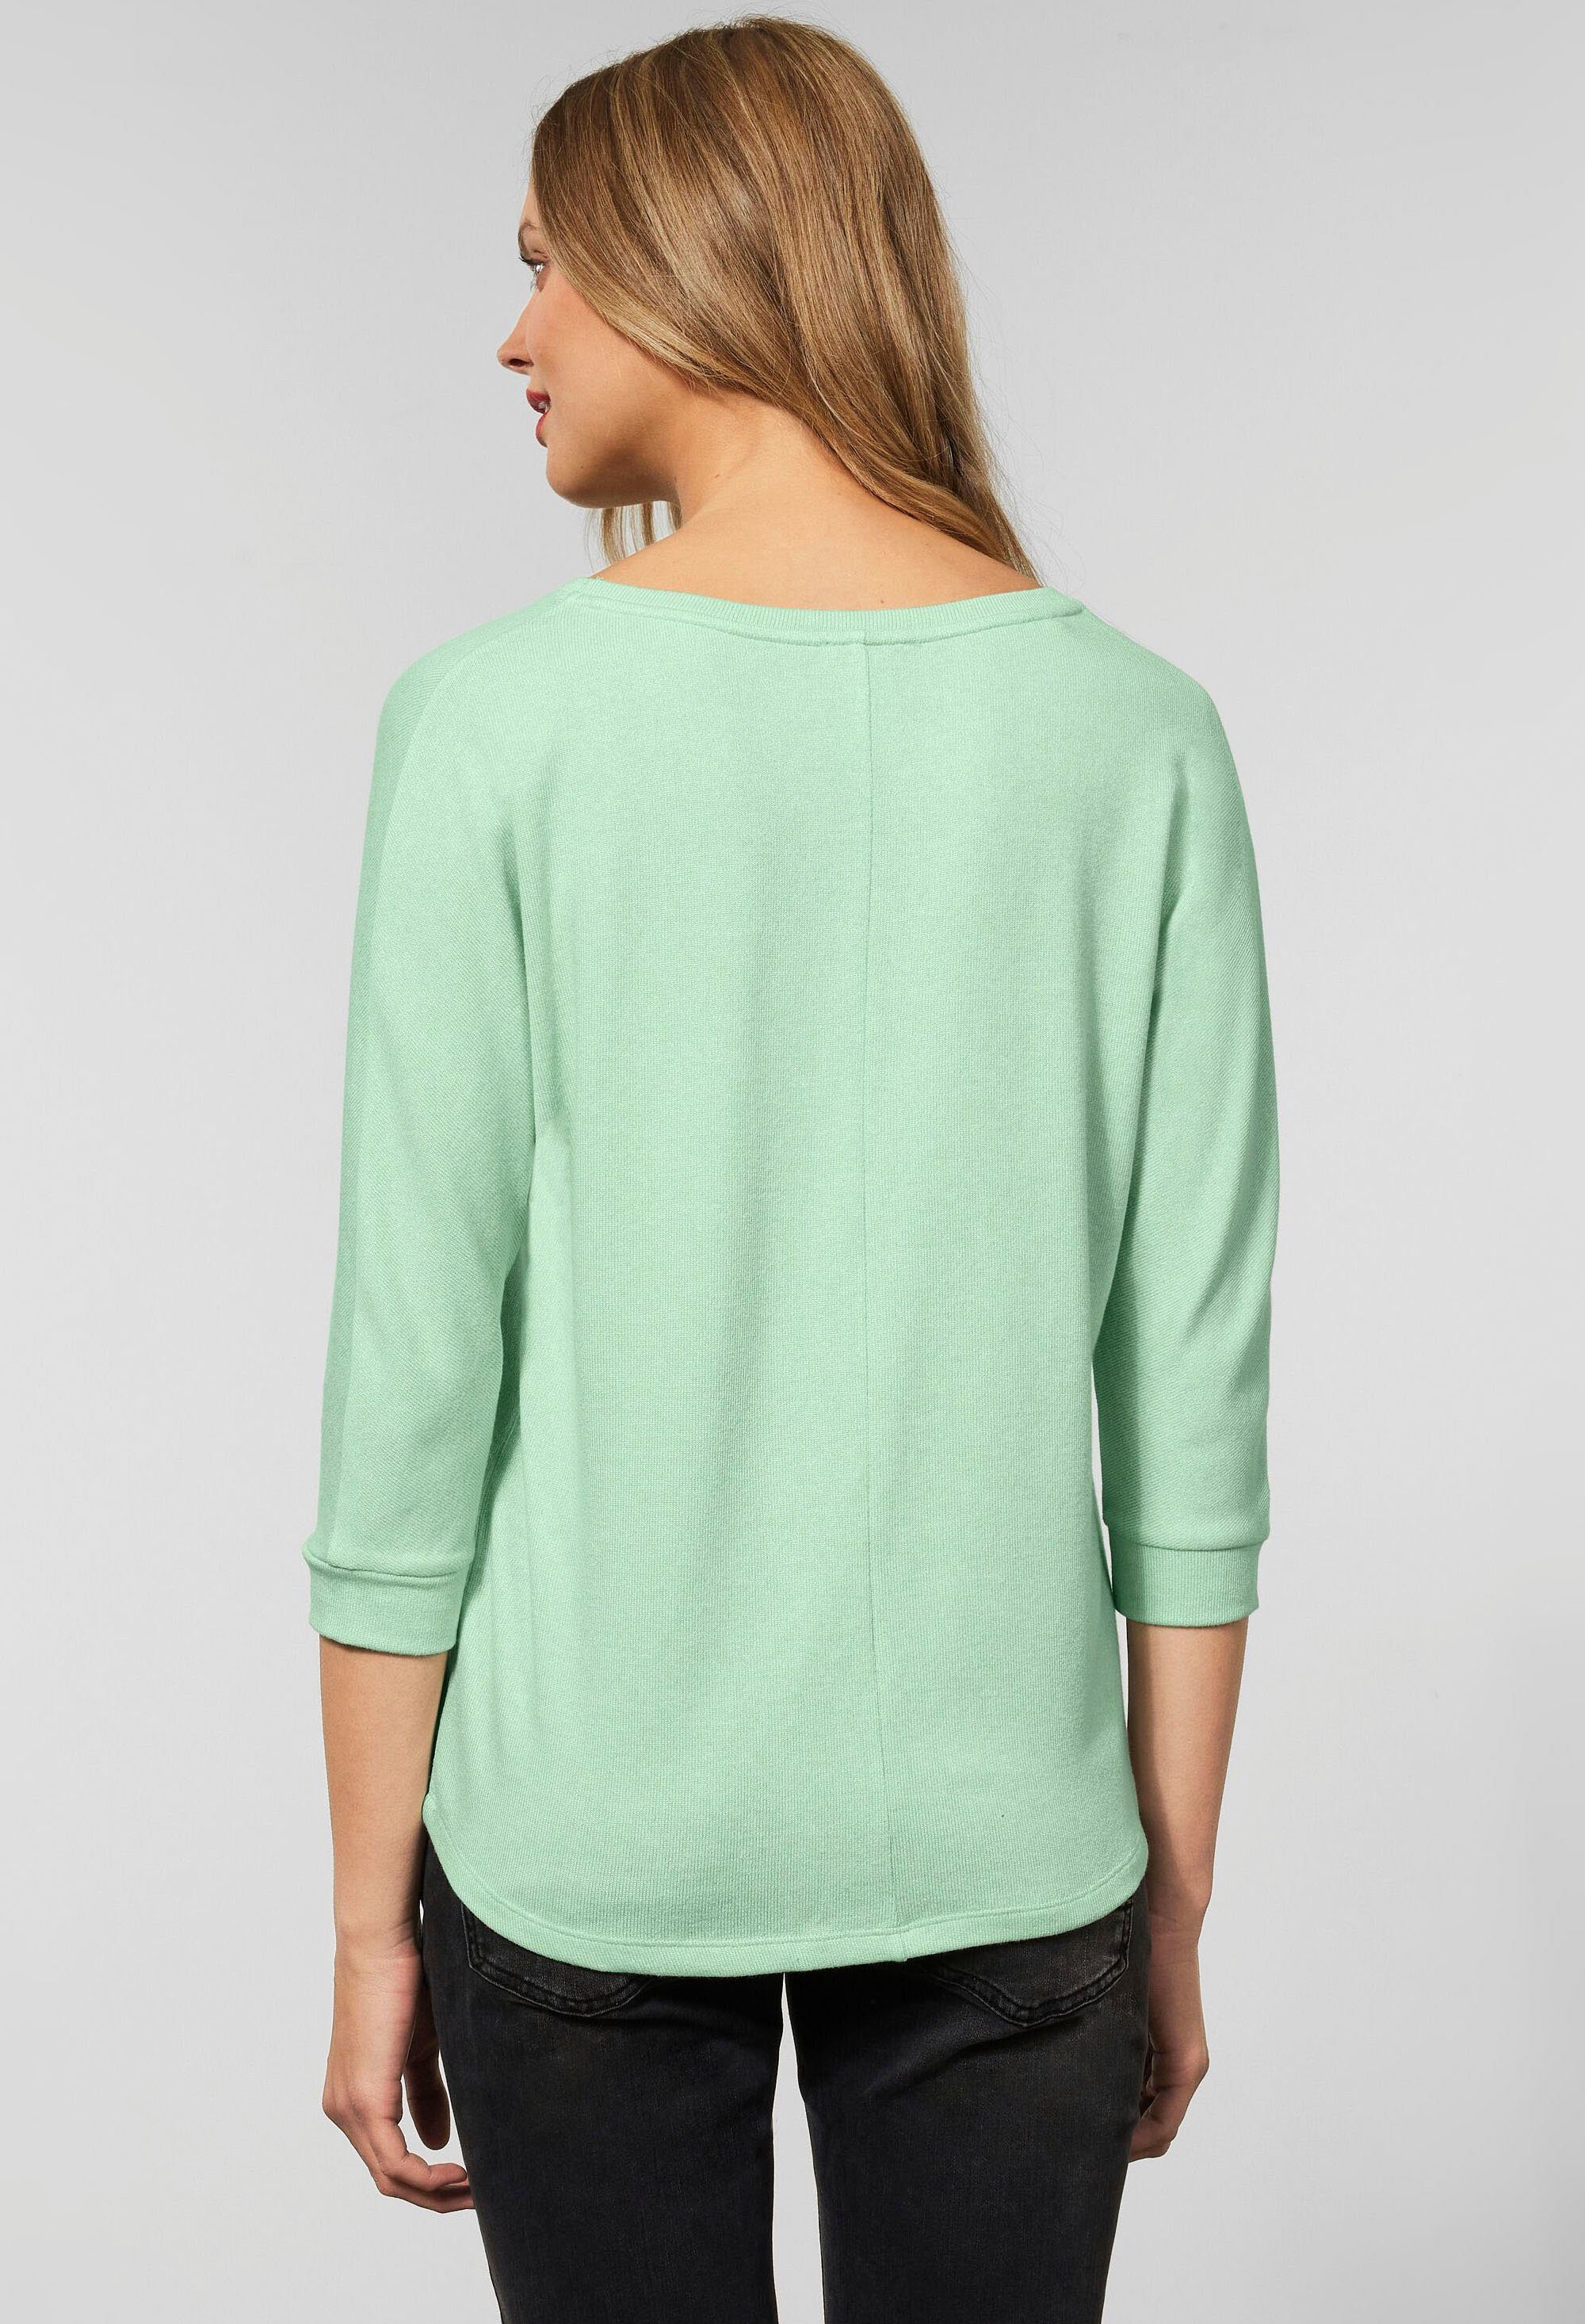 in 3/4-Arm-Shirt STREET Ellen clary melange mint Melange-Optik ONE Style soft